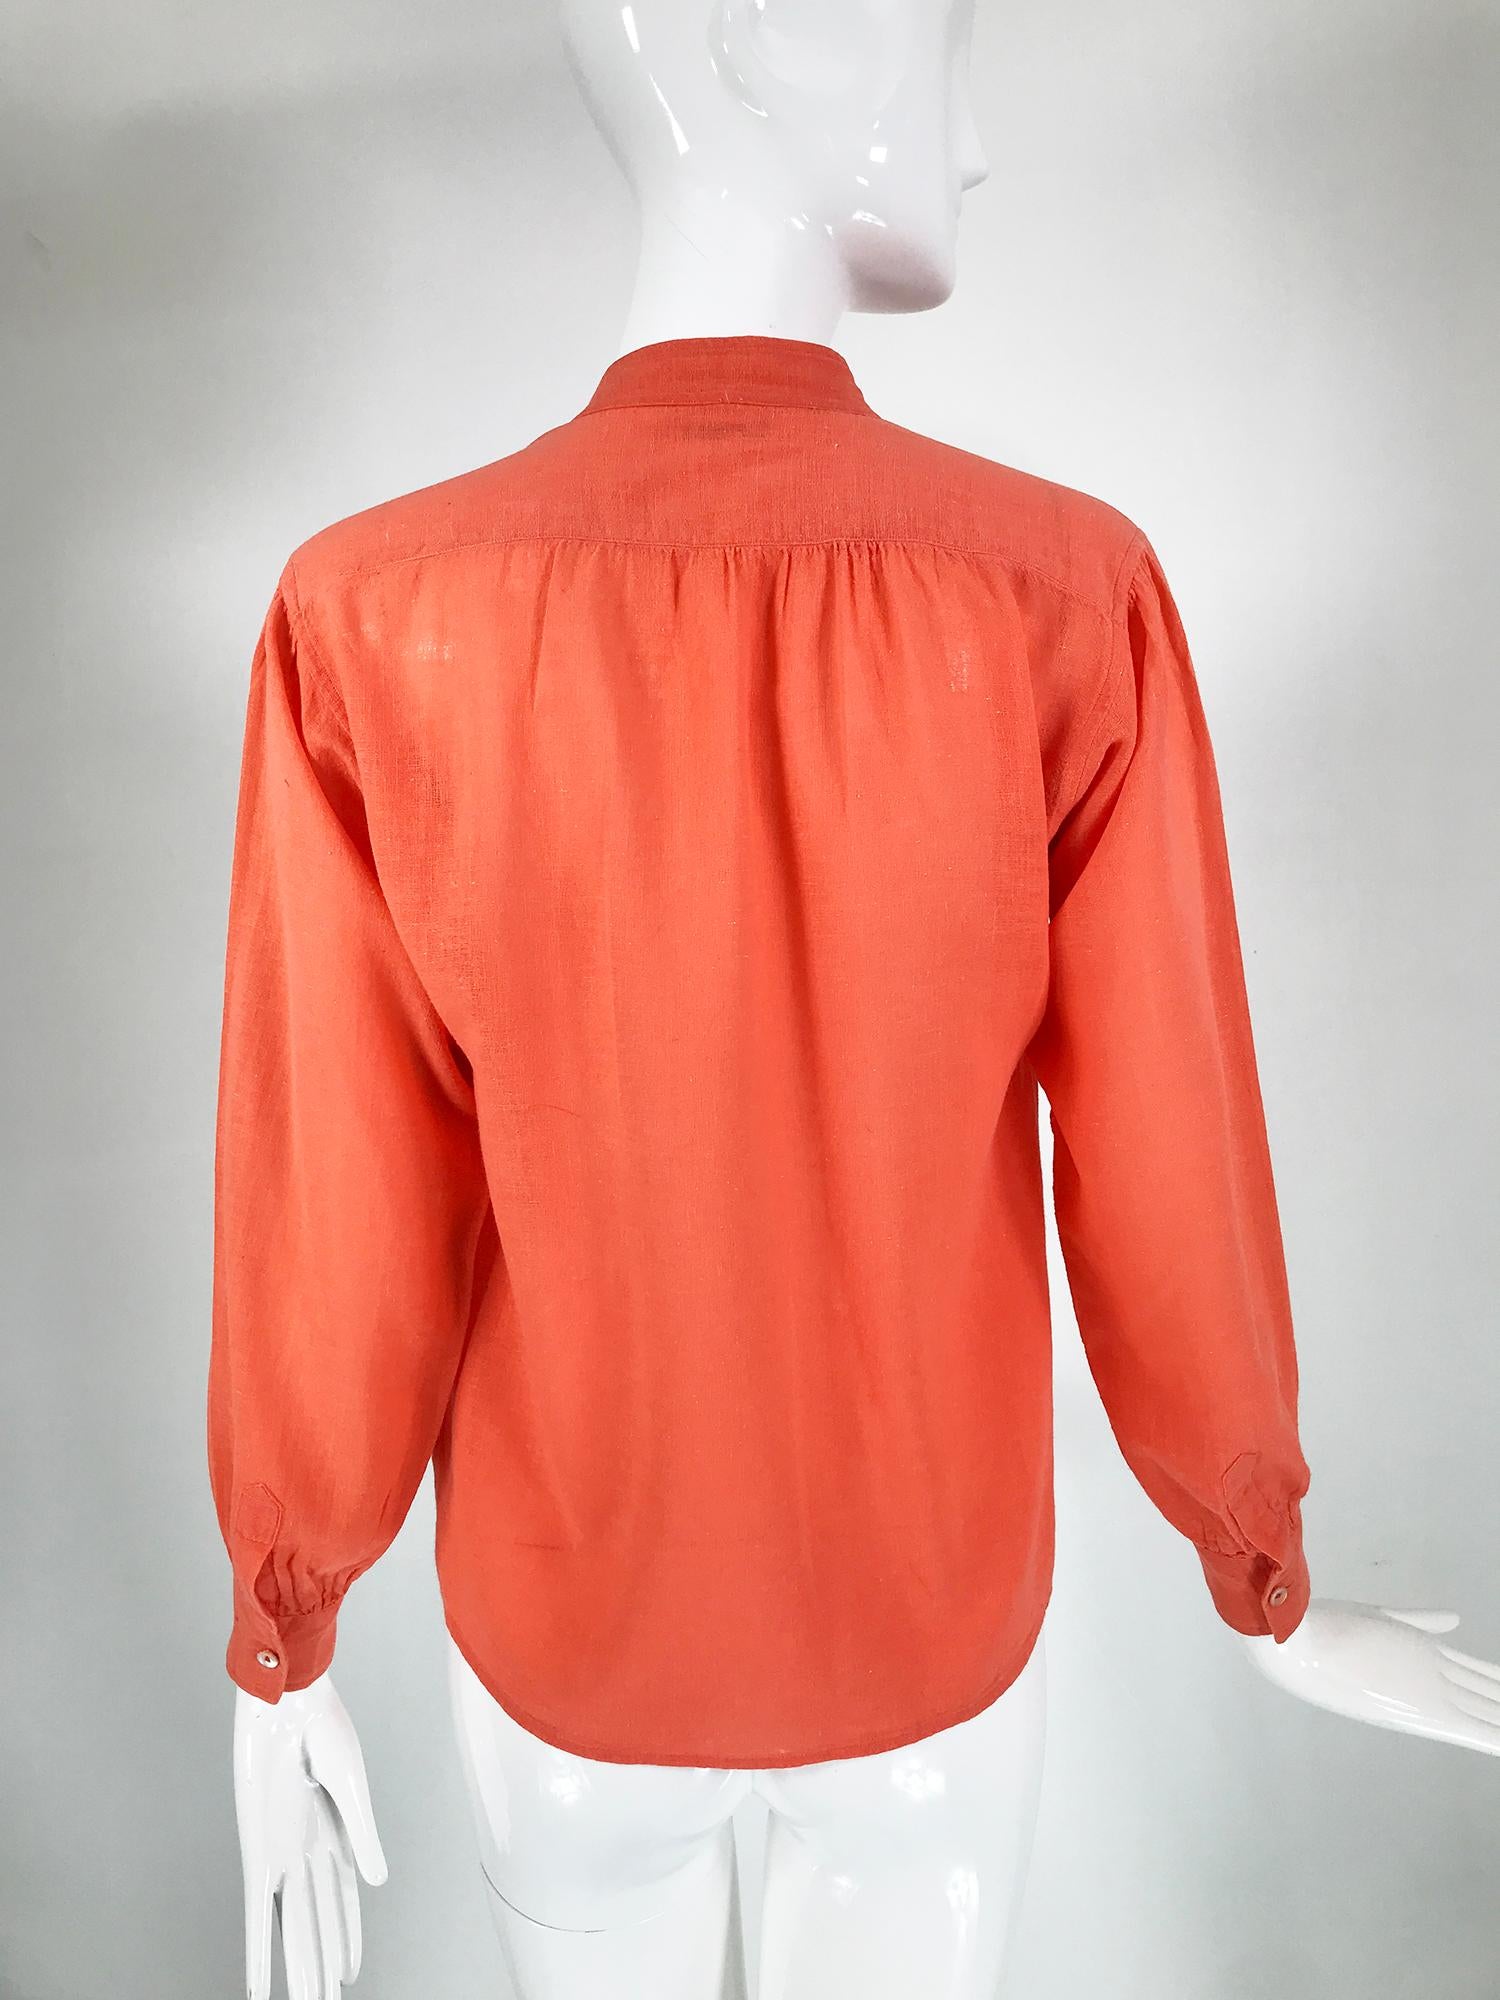 Yves Saint Laurent Rive Gauche Orange Cotton Gauze Blouse 1960s In Good Condition In West Palm Beach, FL